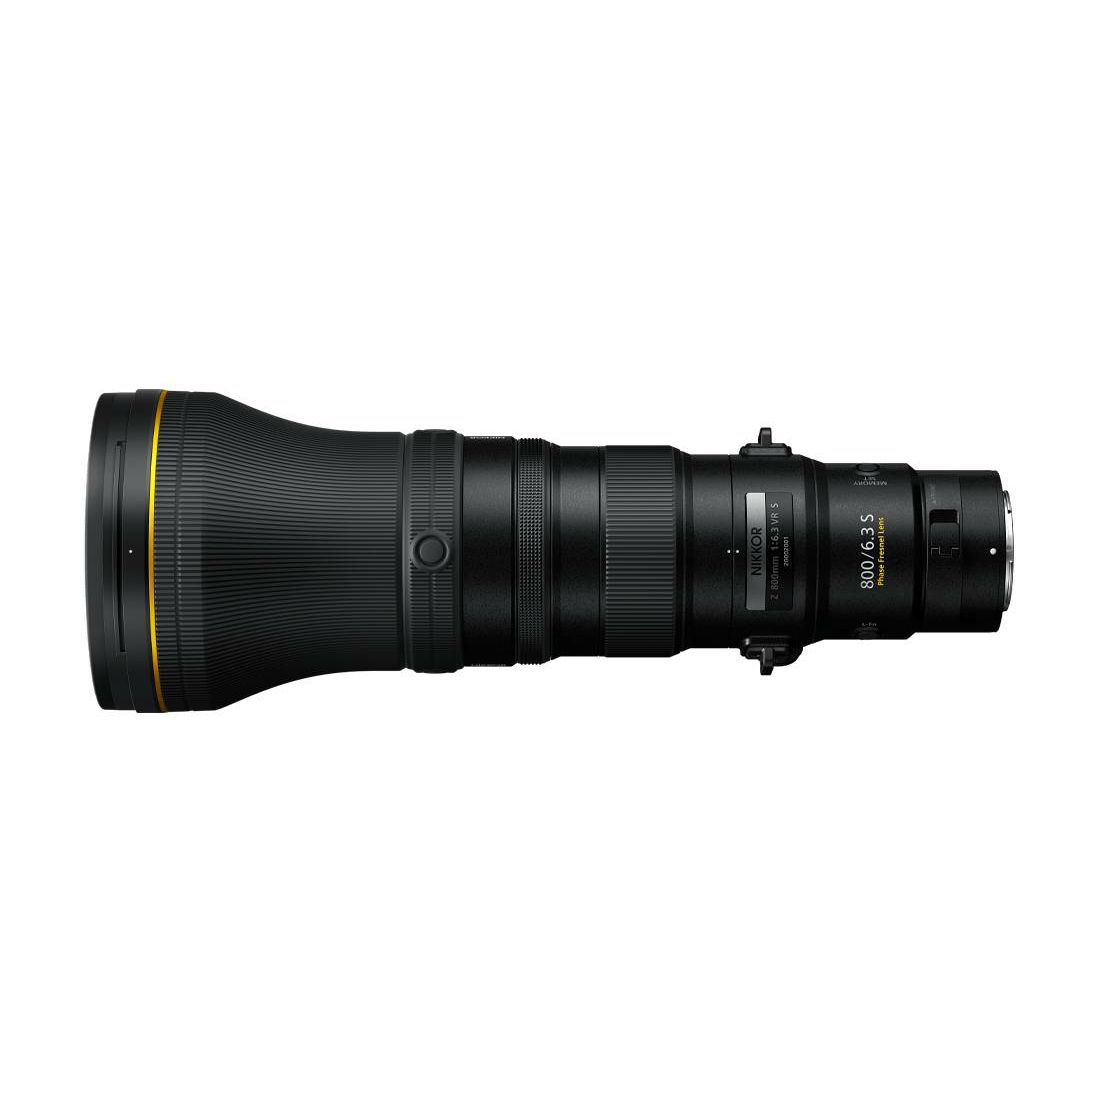 Nikon Z 800mm f/6.3 VR S telefoto objektiv